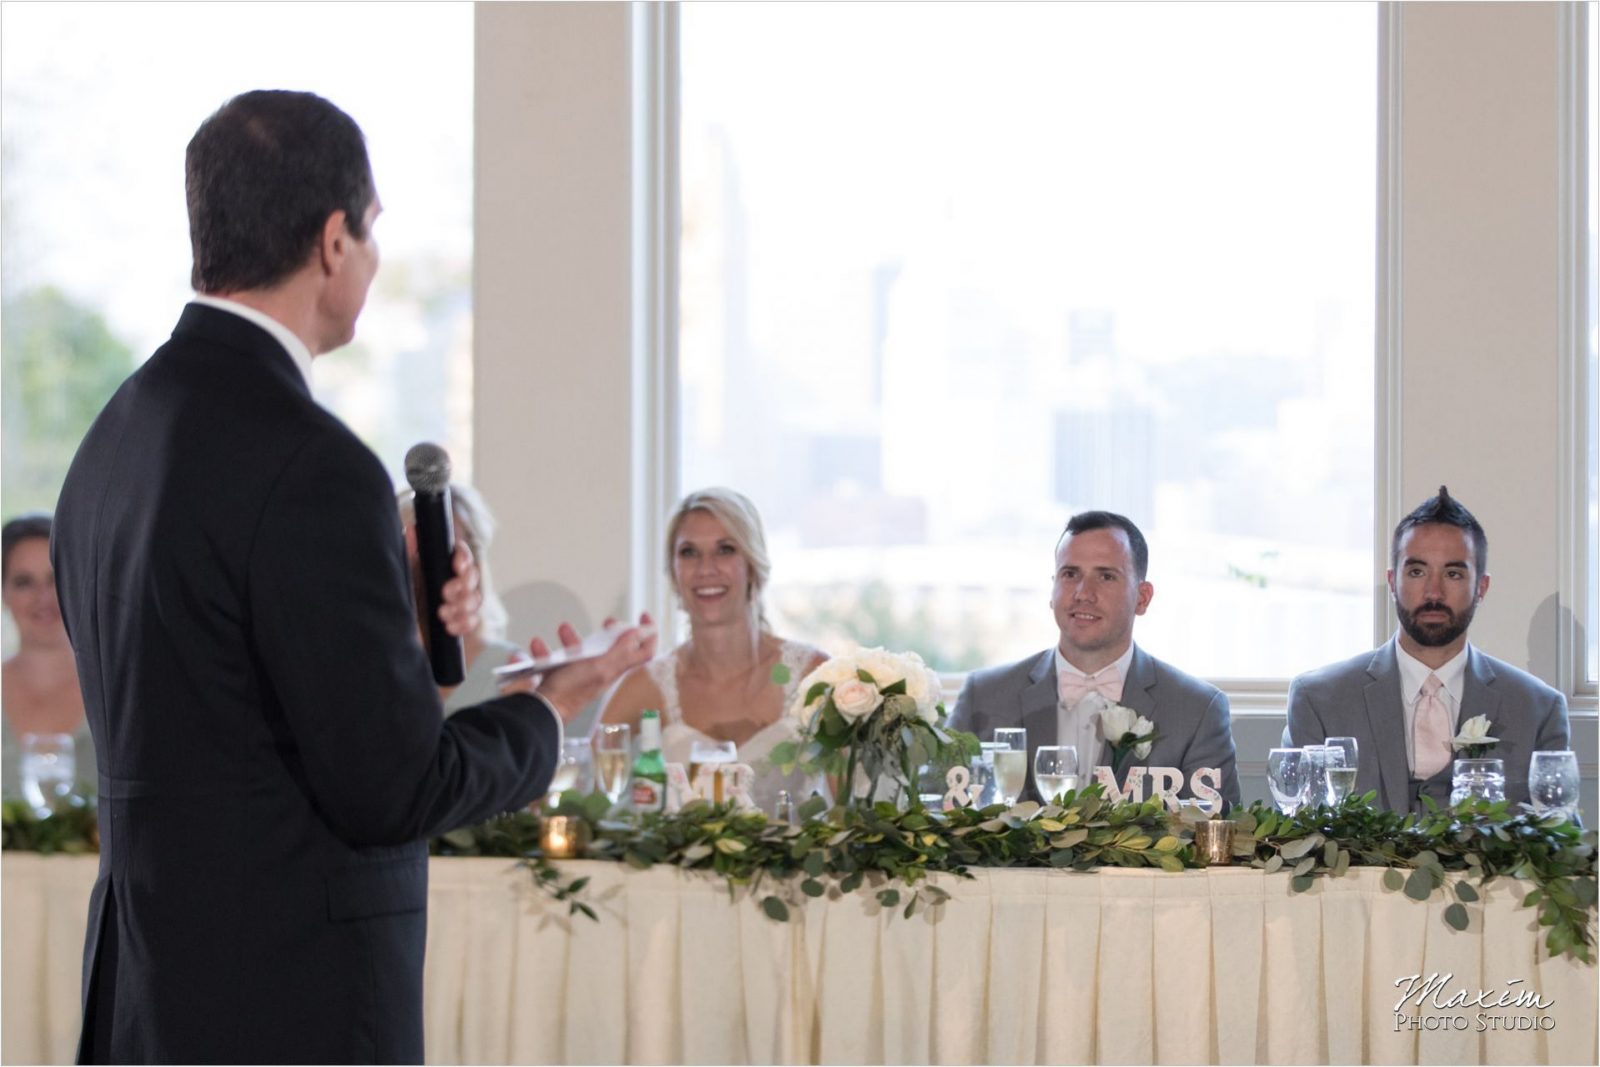 Drees Pavilion Covington Kentucky Wedding Reception